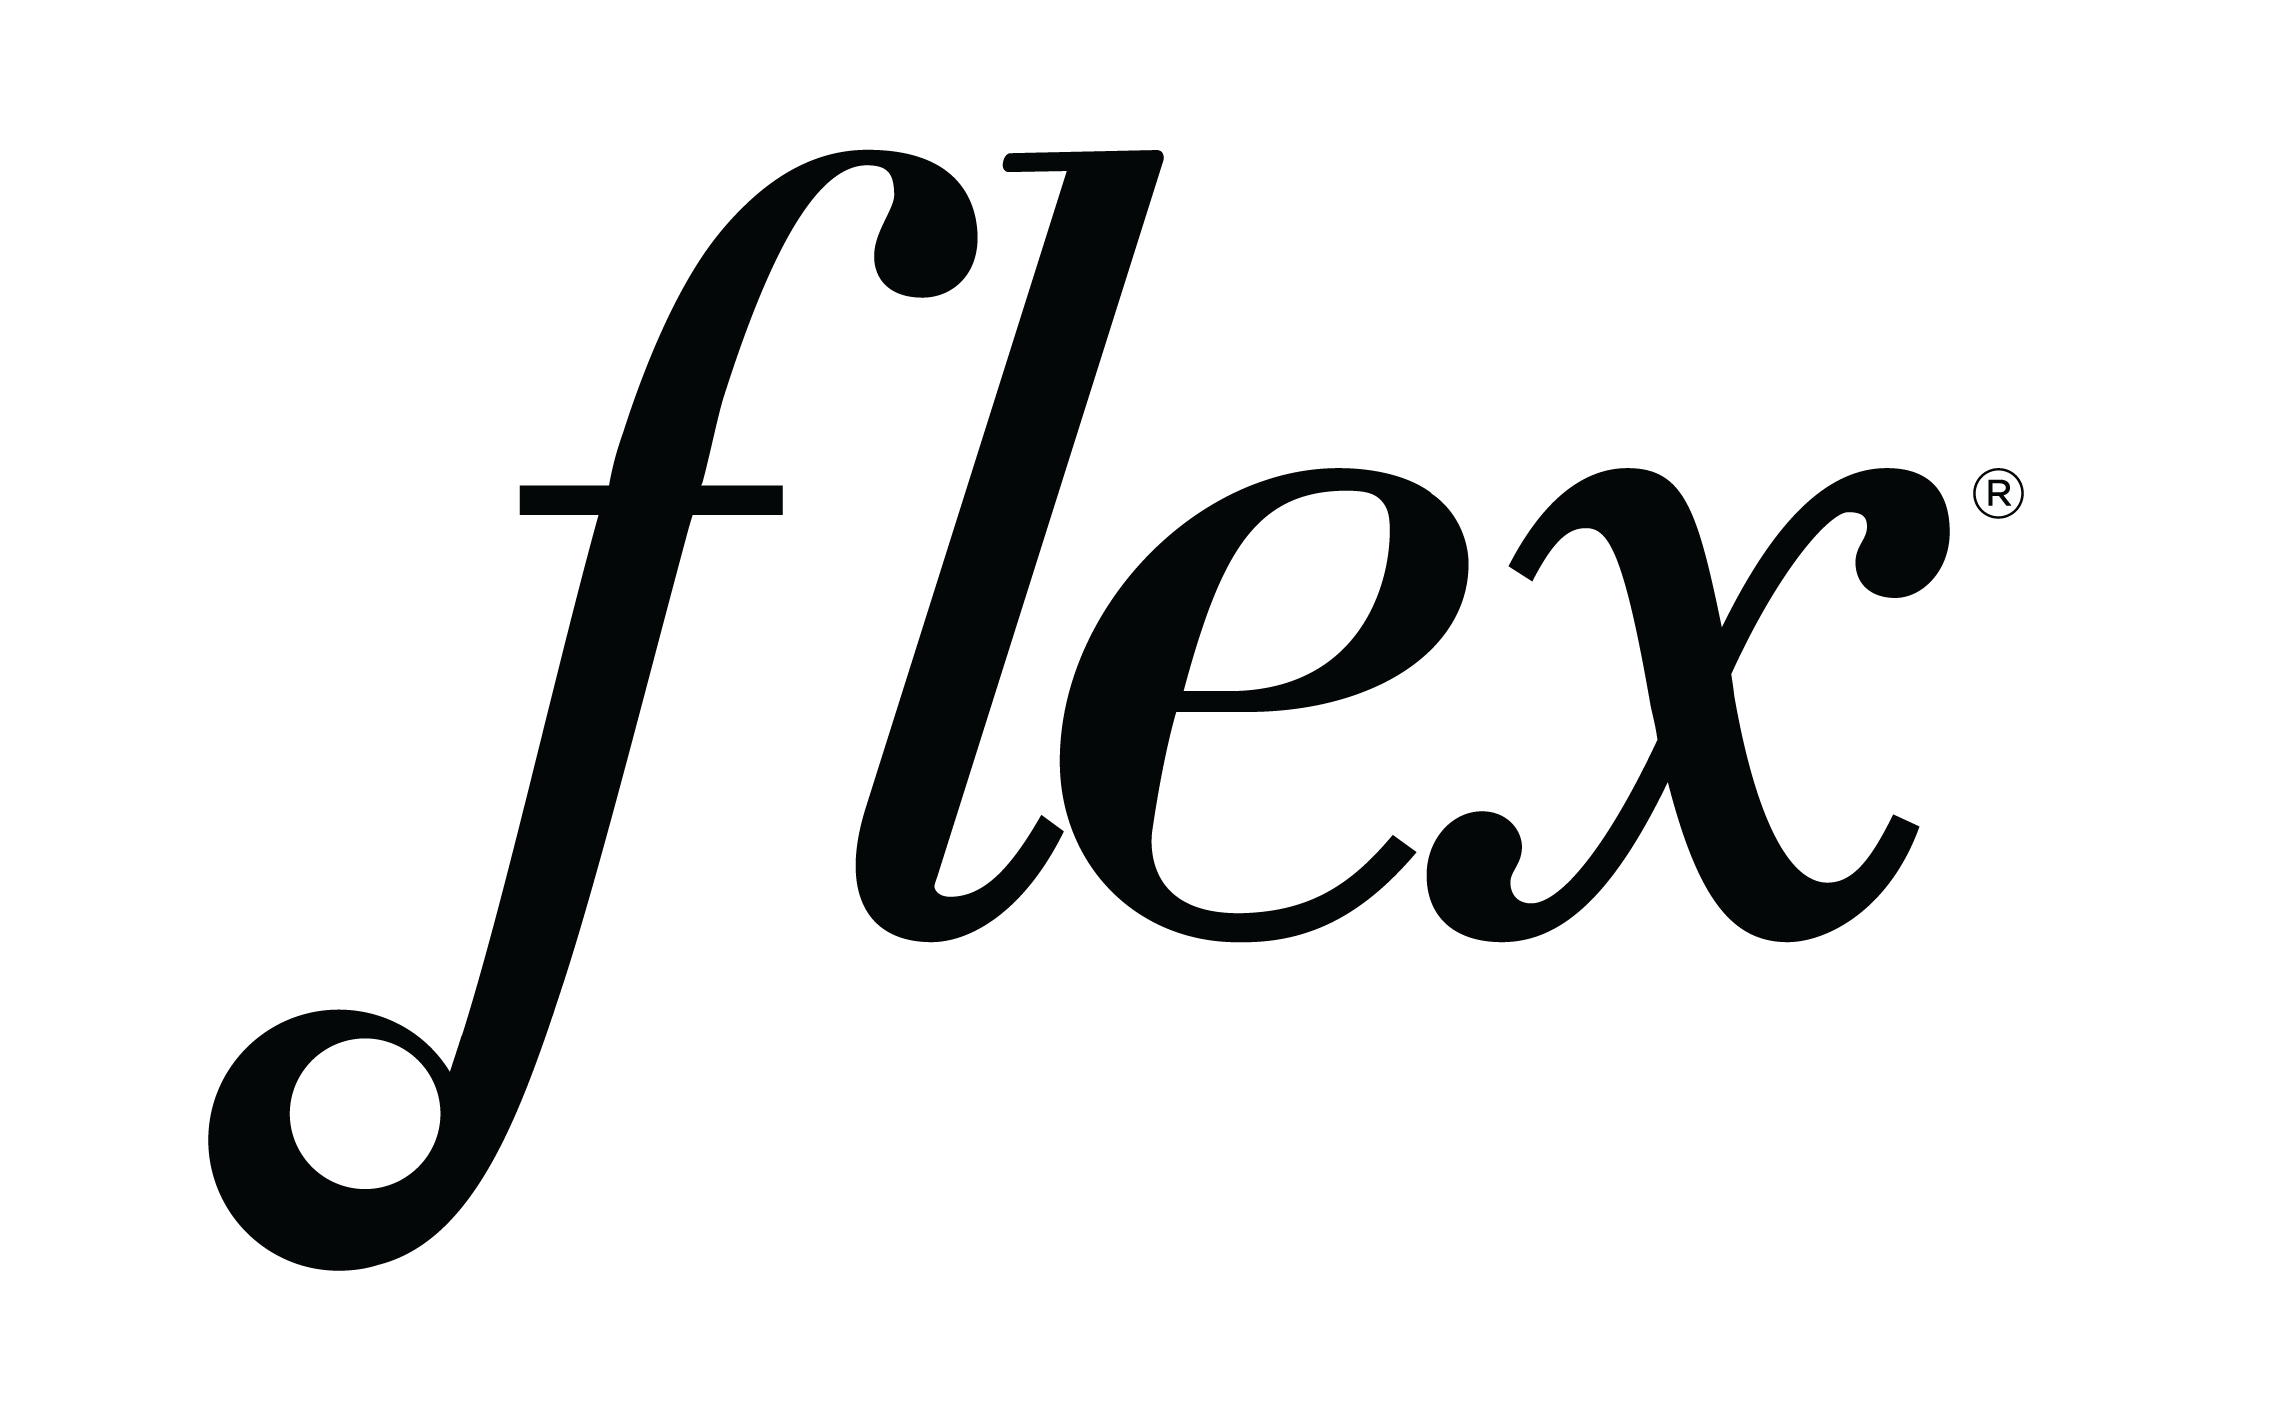 flex logo